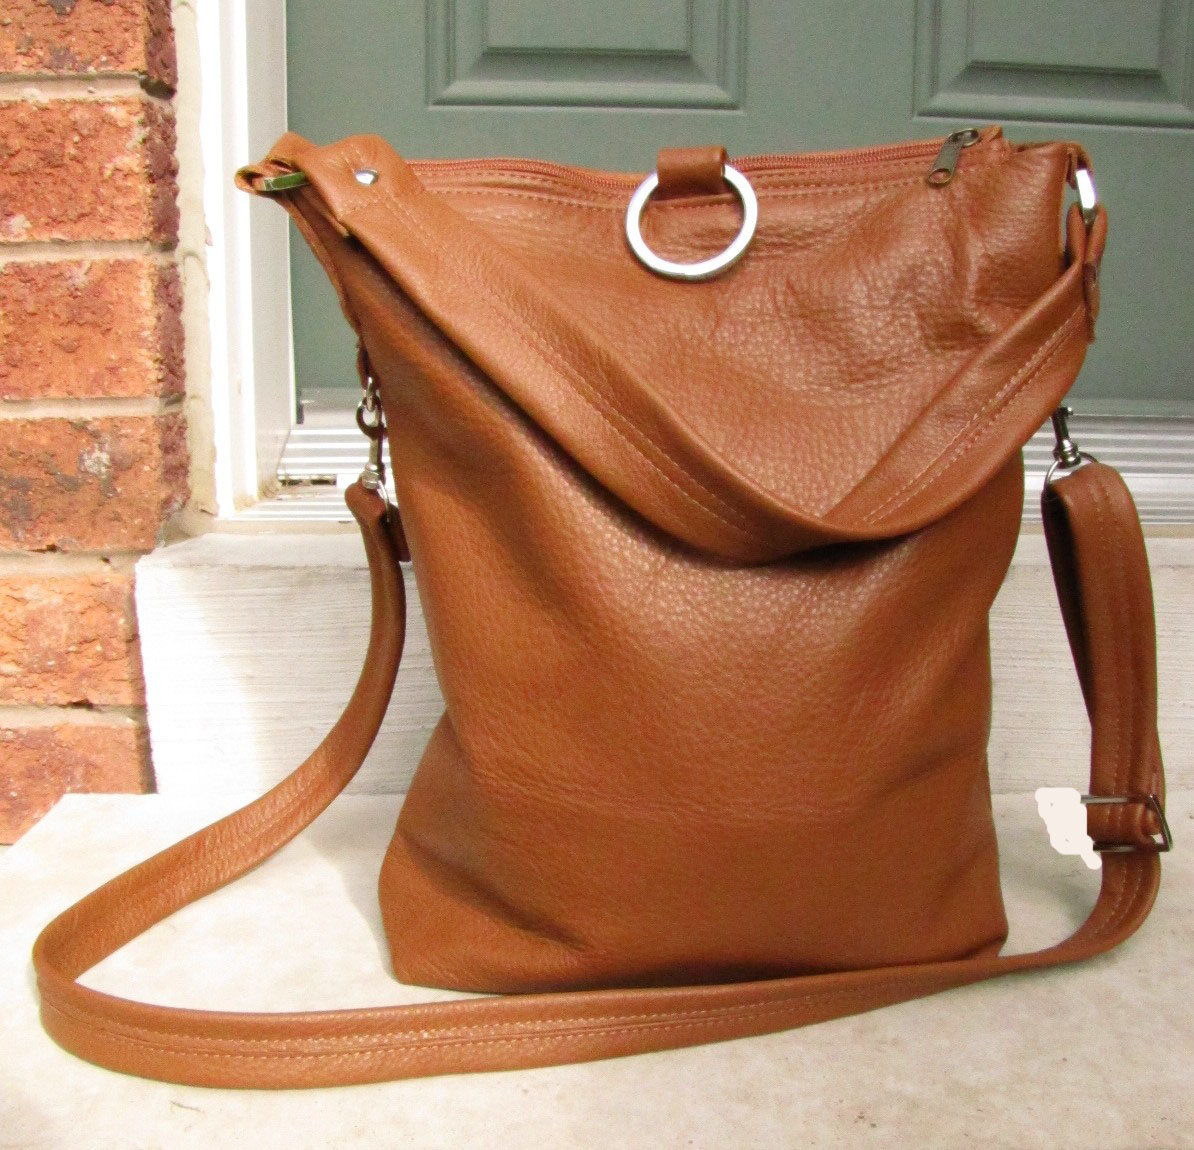 3 Way Leather Tote Bag In Tan